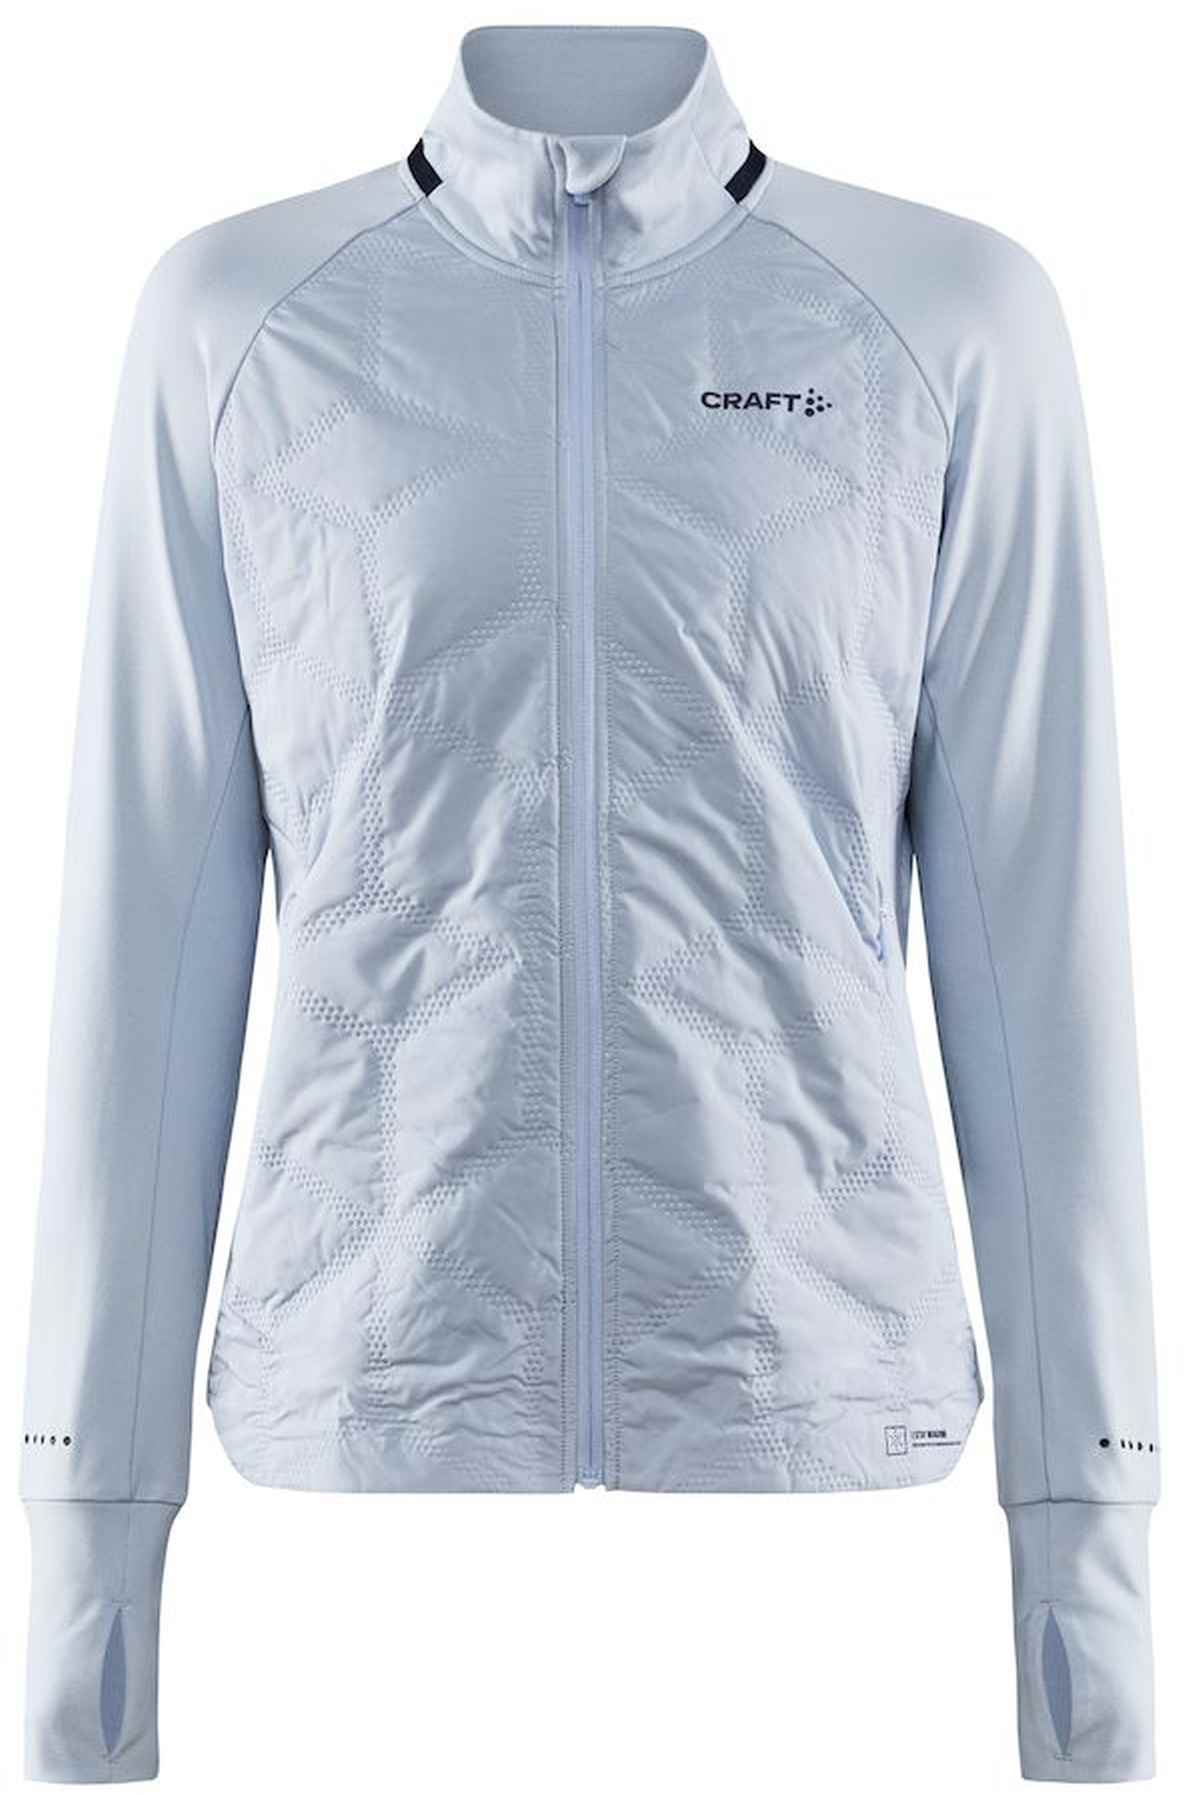 Women's insulated running jacket